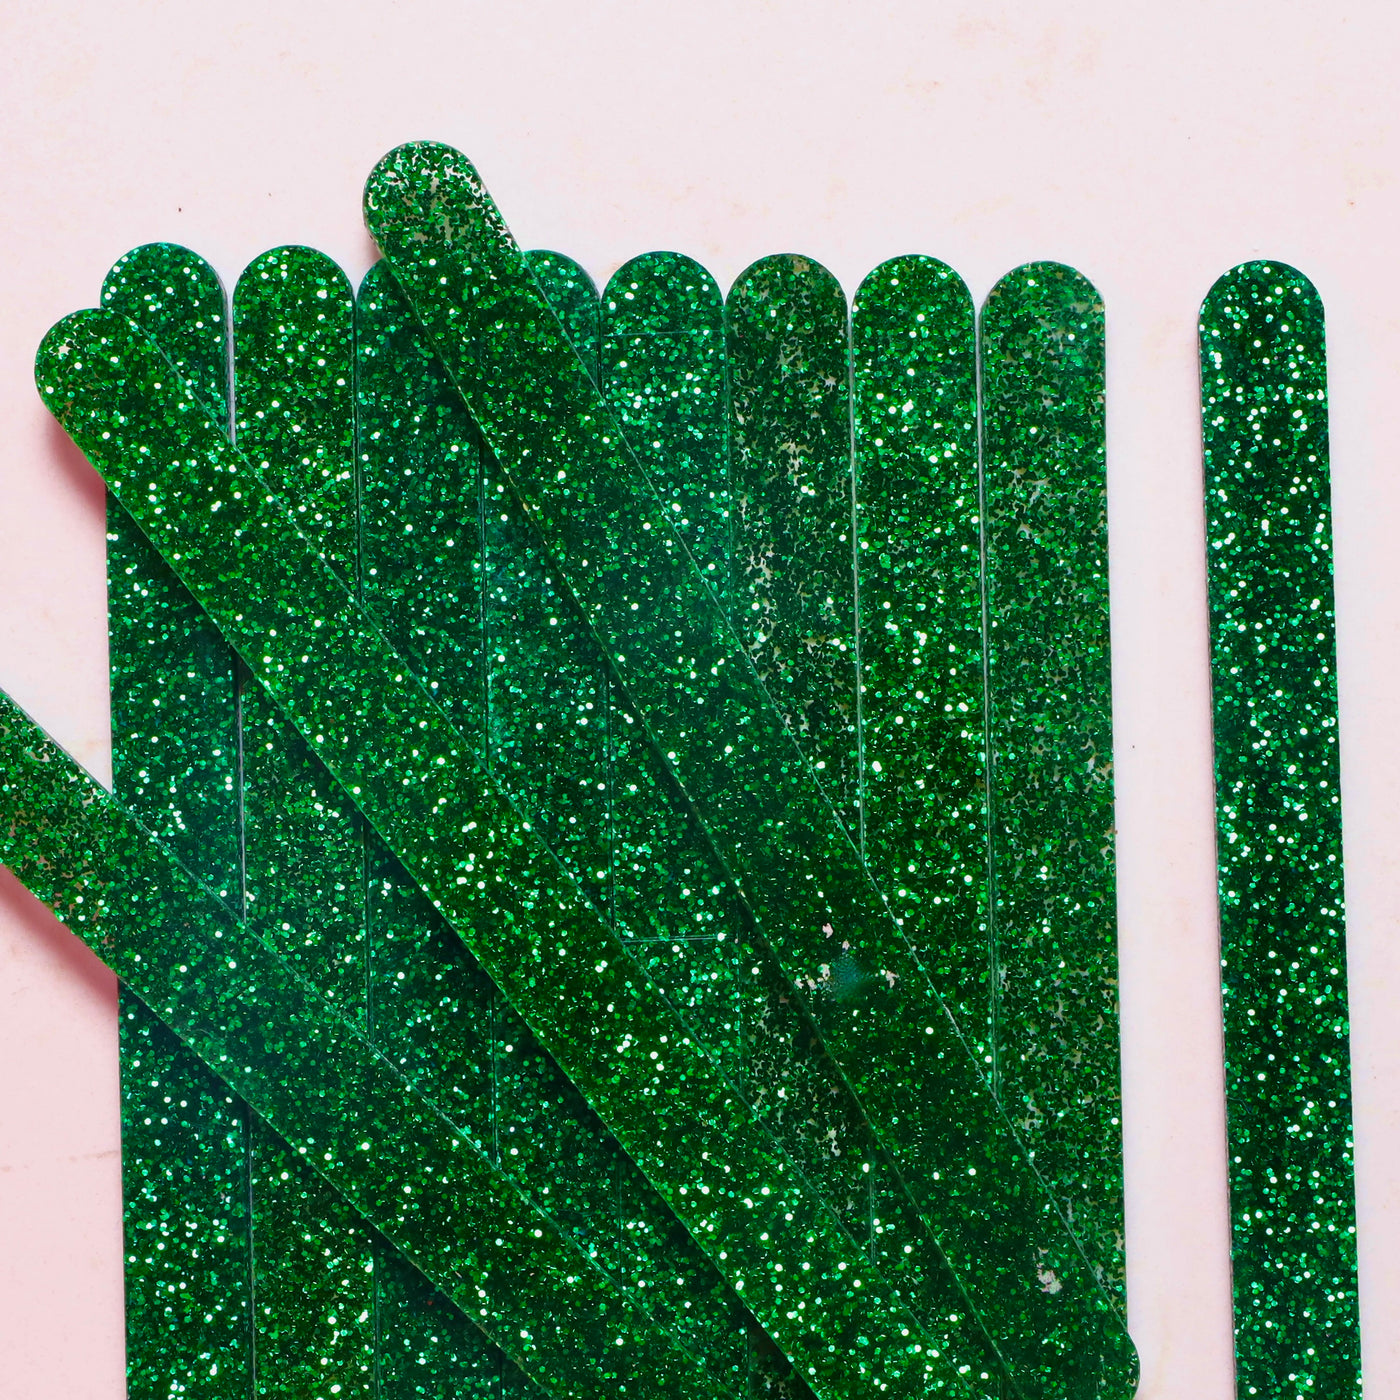 24 Snowflake Glitter Popsicle Sticks